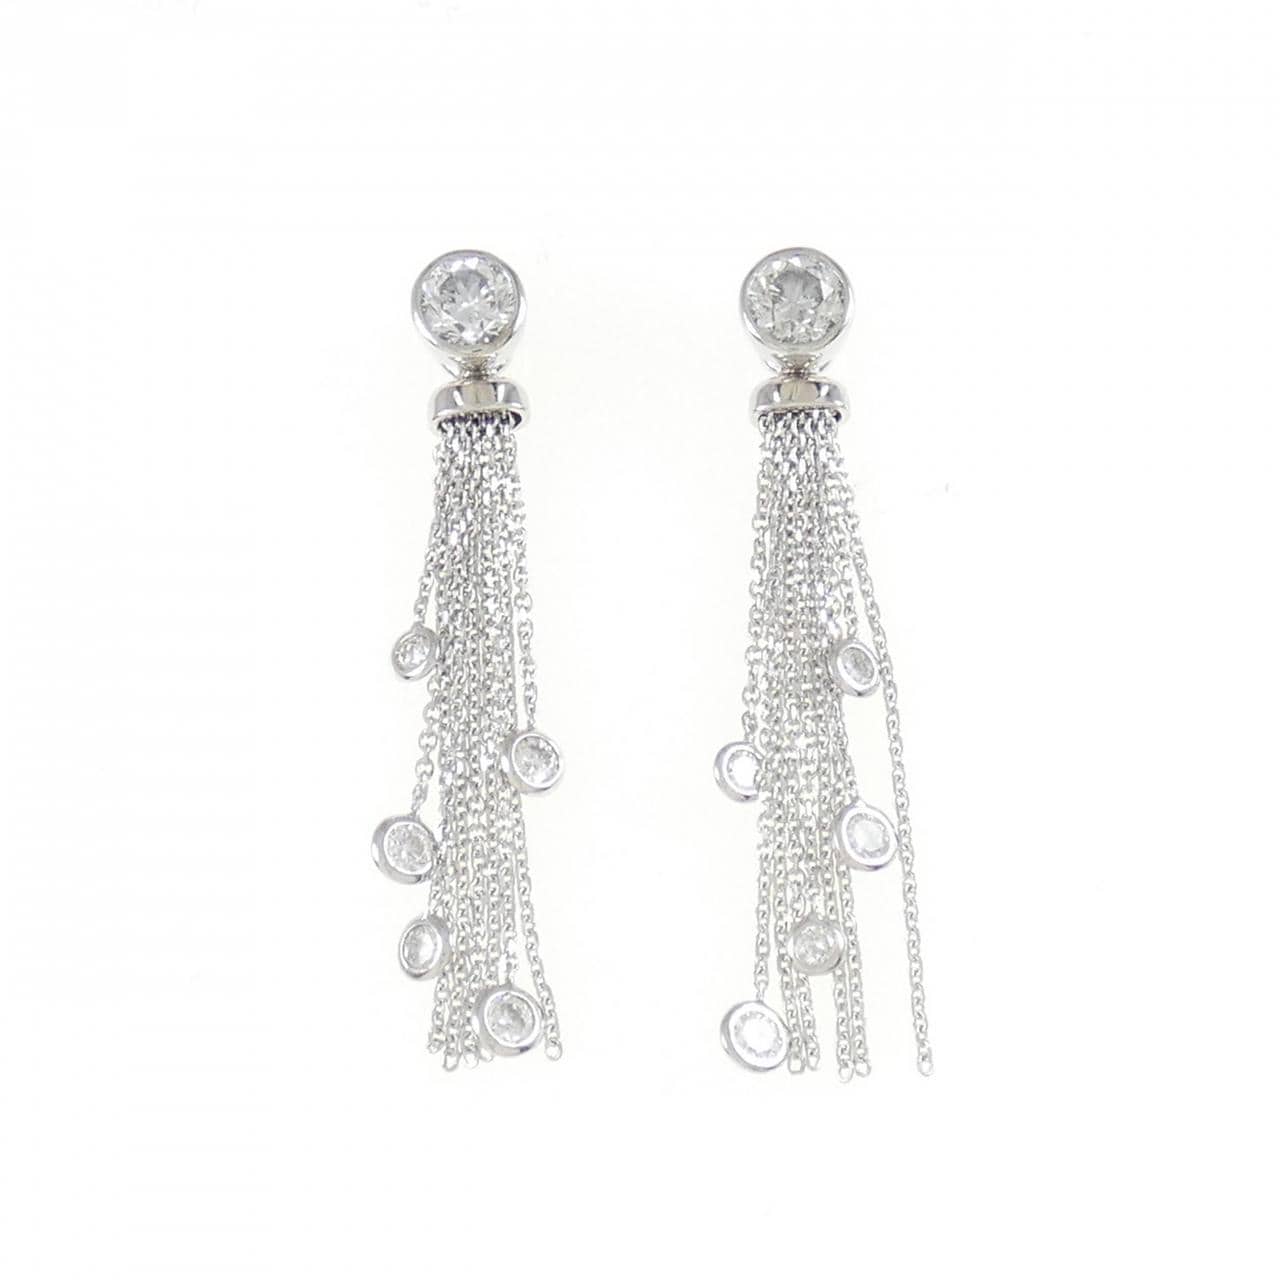 K18WG 2WAY Diamond earrings 1.32CT